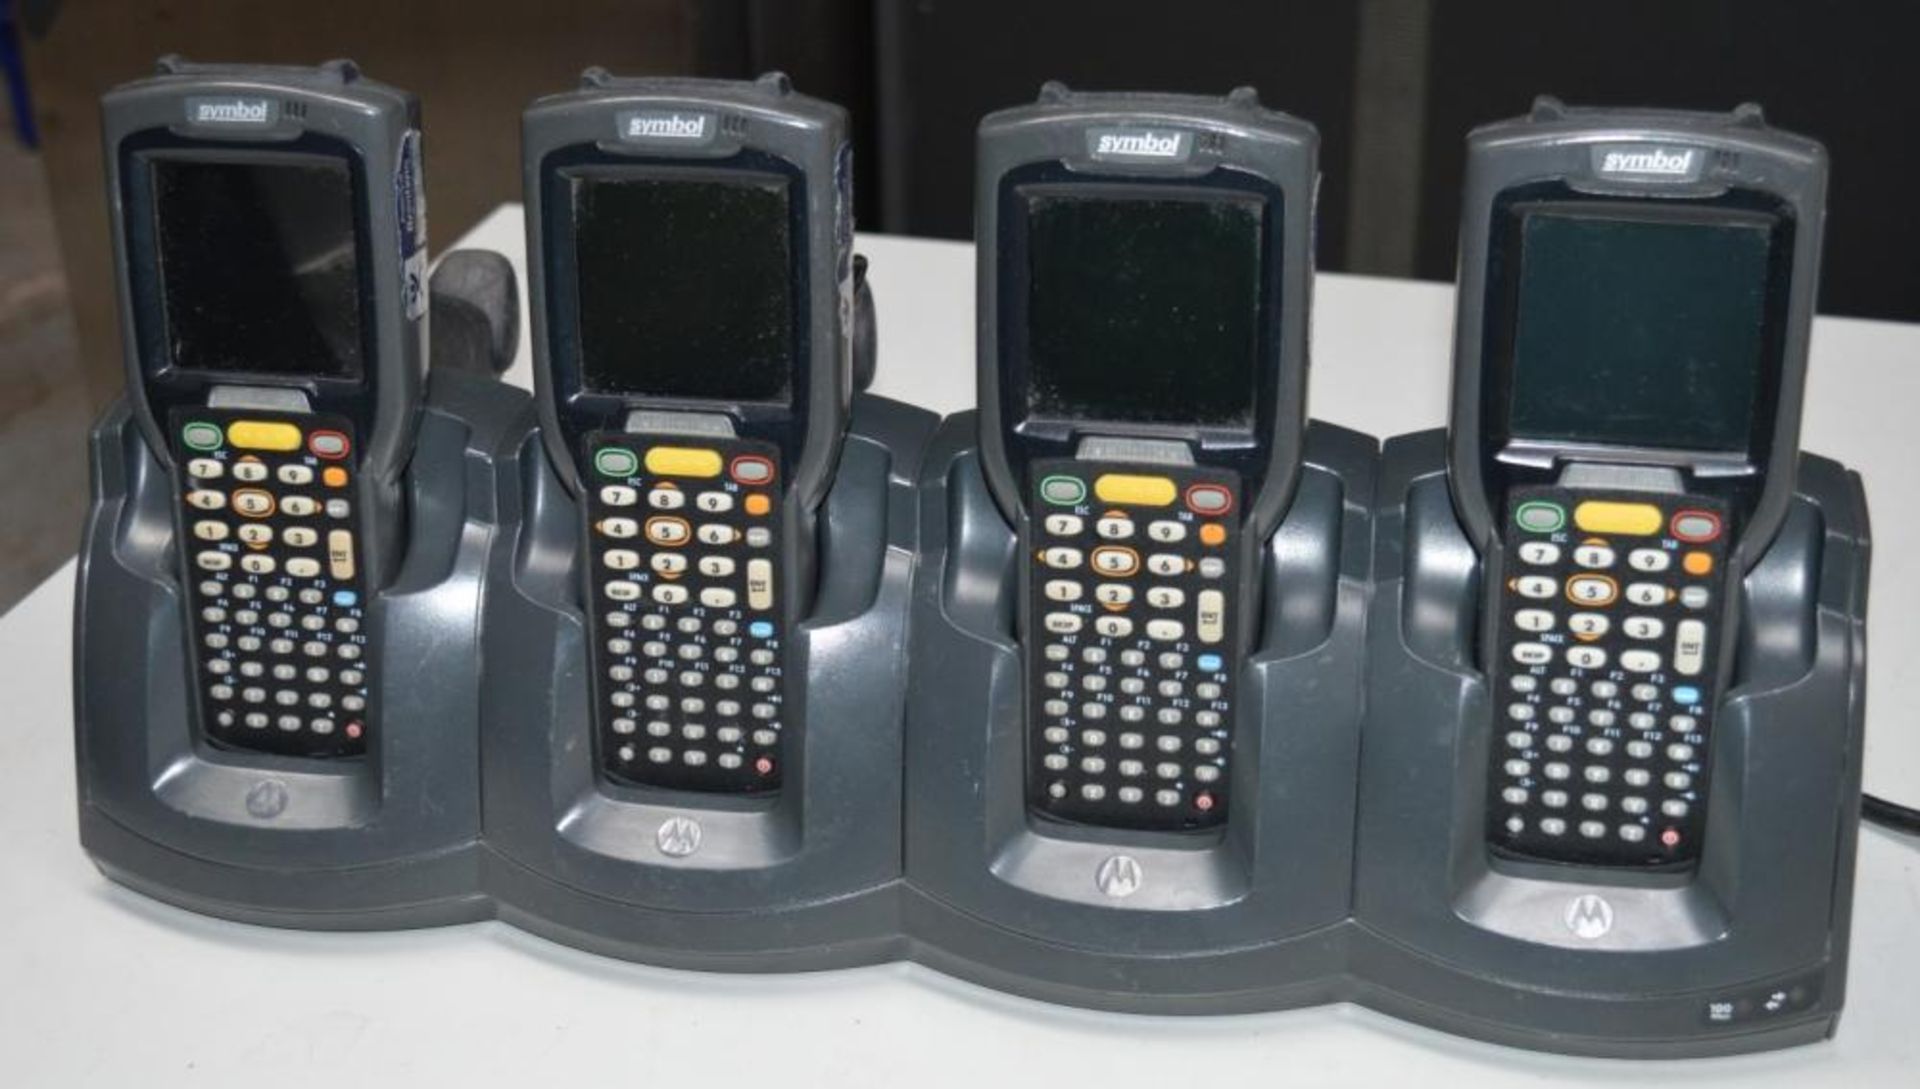 4 x Motorola Symbol MC3090 Handheld Barcode Scanners - Mobile Computer PDA - Includes Charging Dock, - Image 3 of 7